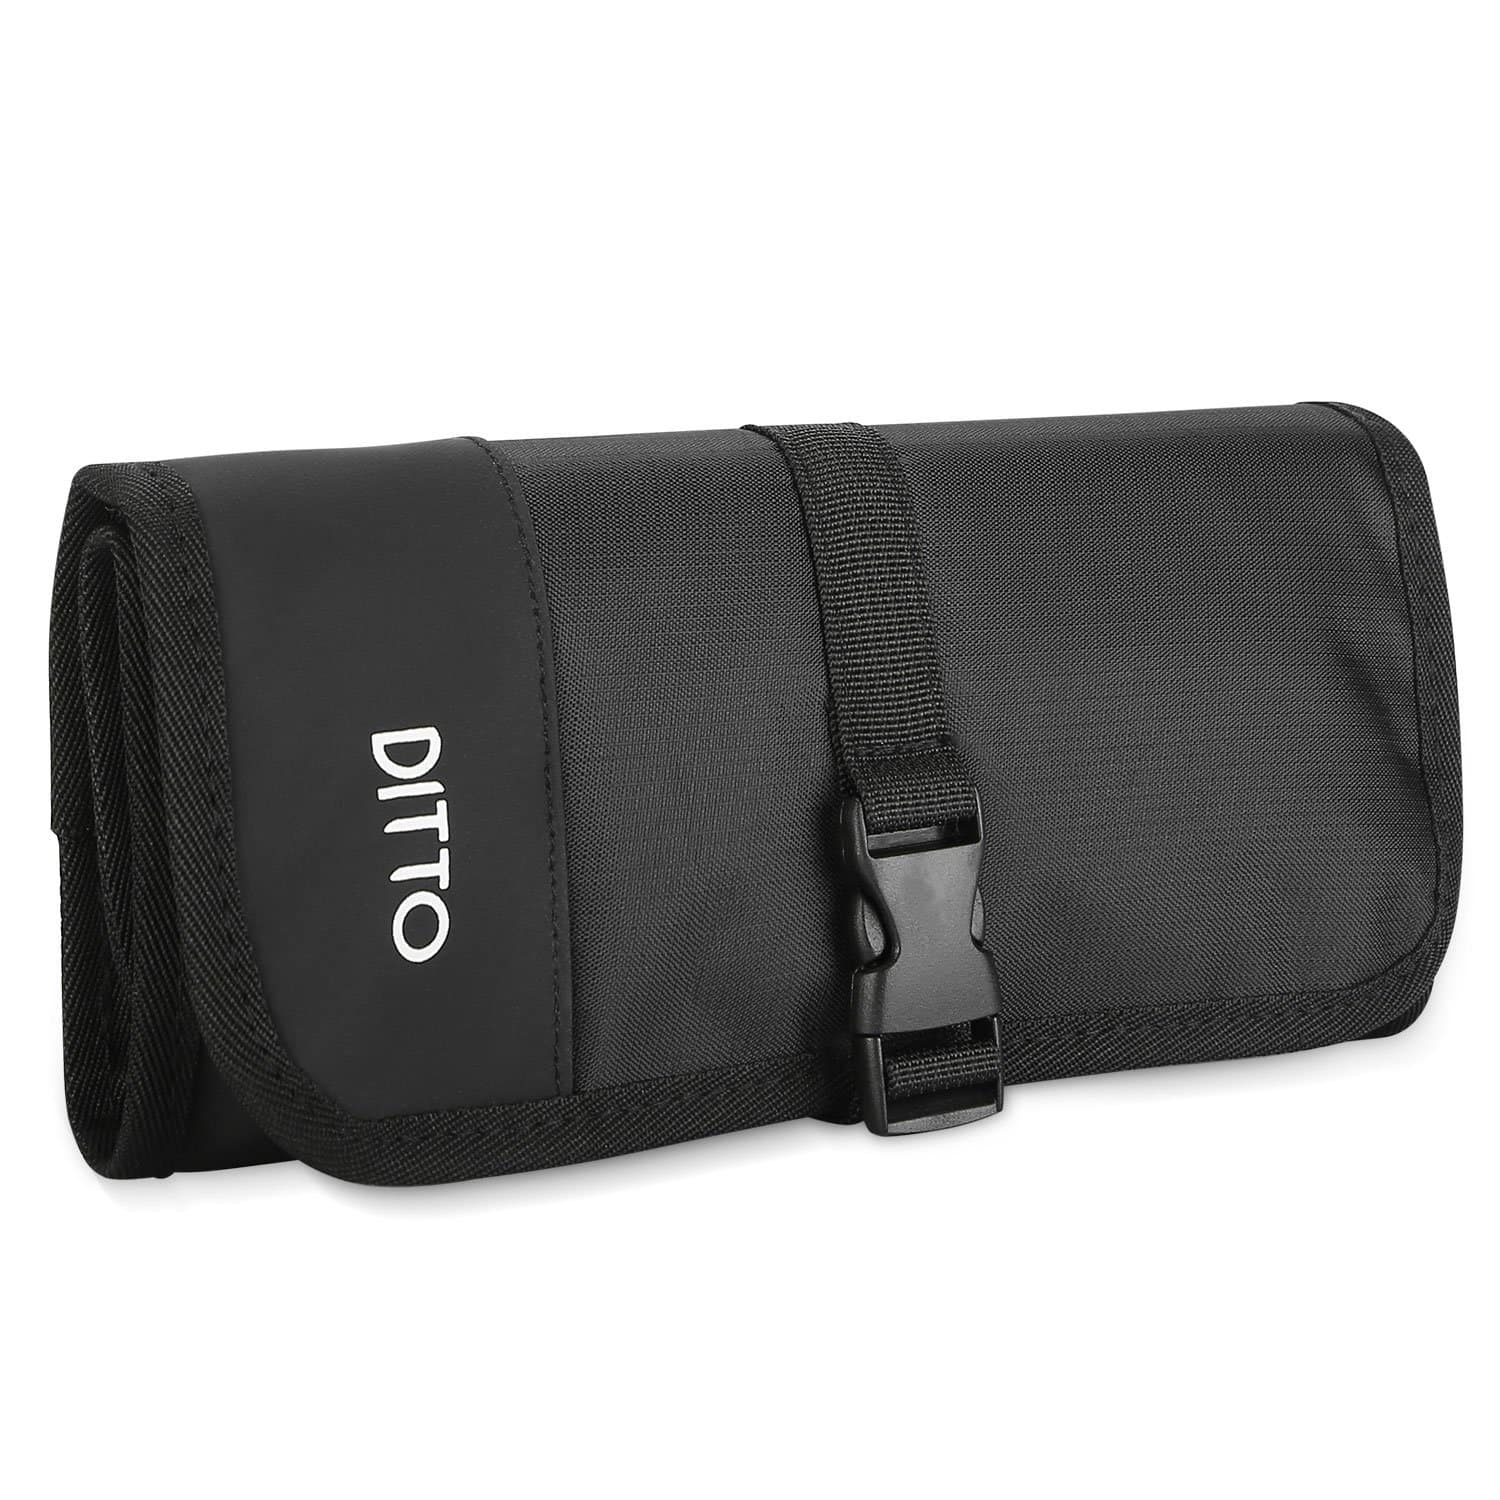 Ditto Electronics Organizer Travel Bag